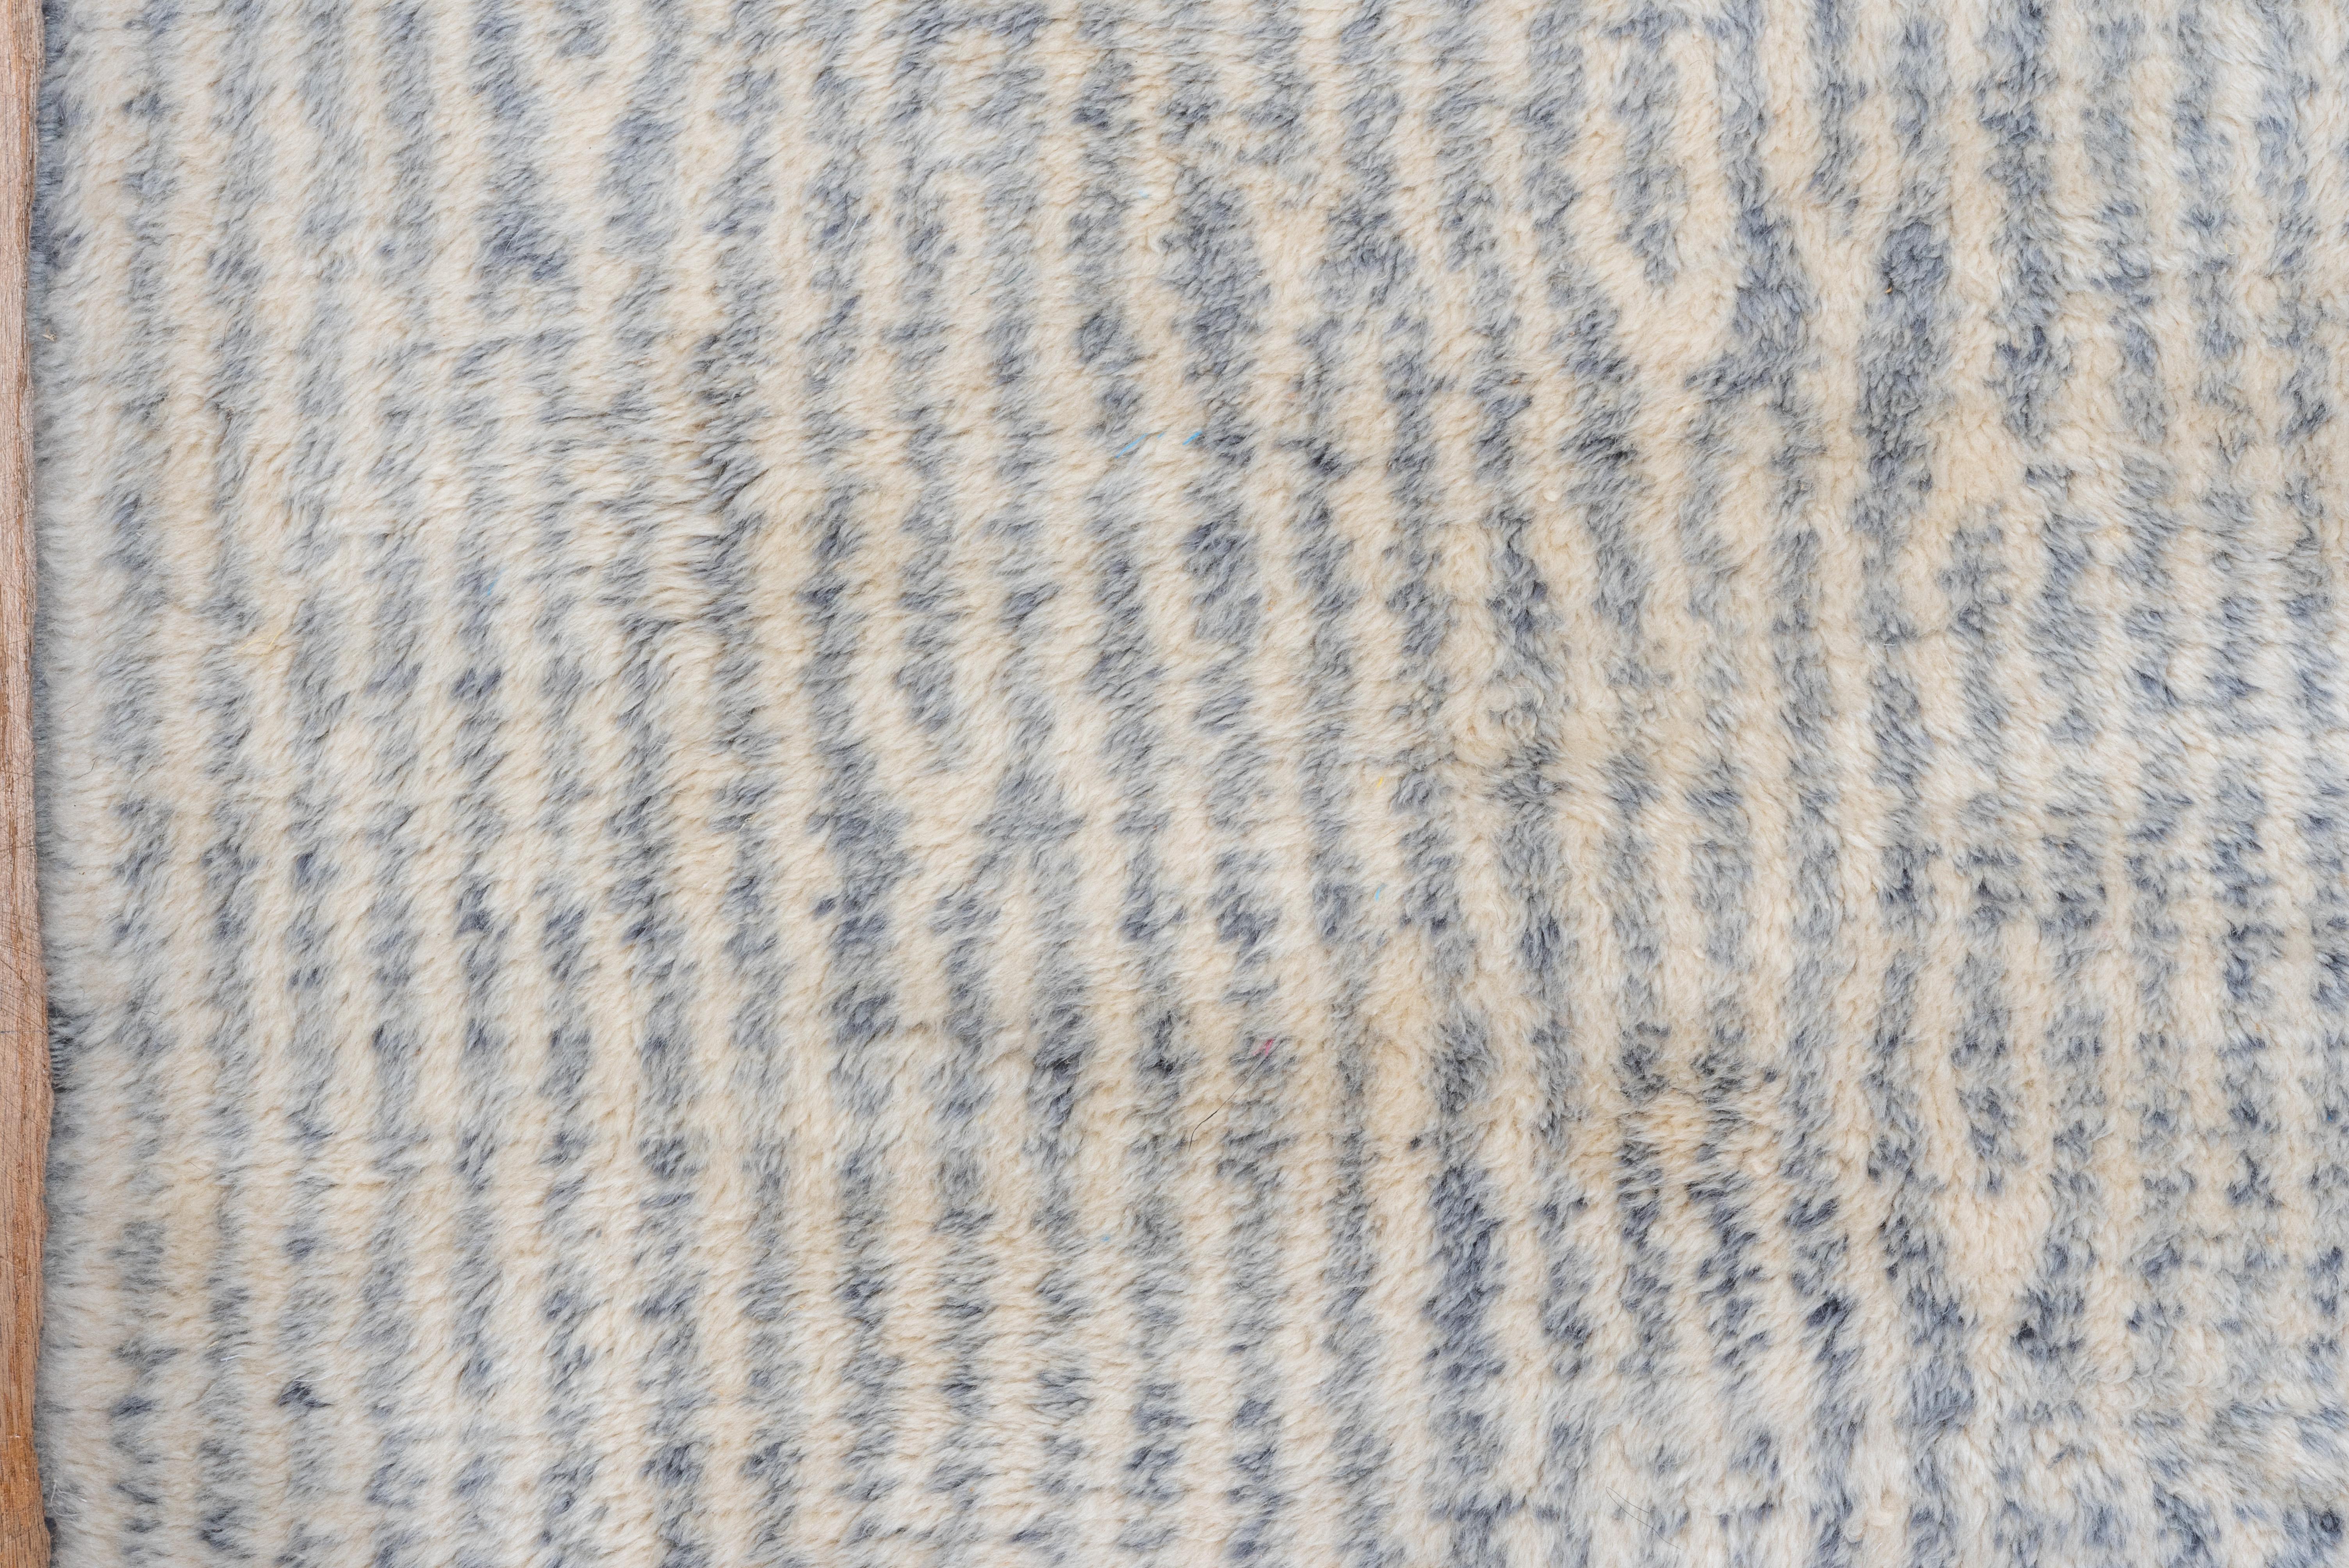 Wool Beautiful & Modern Striped Moroccan Carpet, Cream, Silver, Gray & White Palette